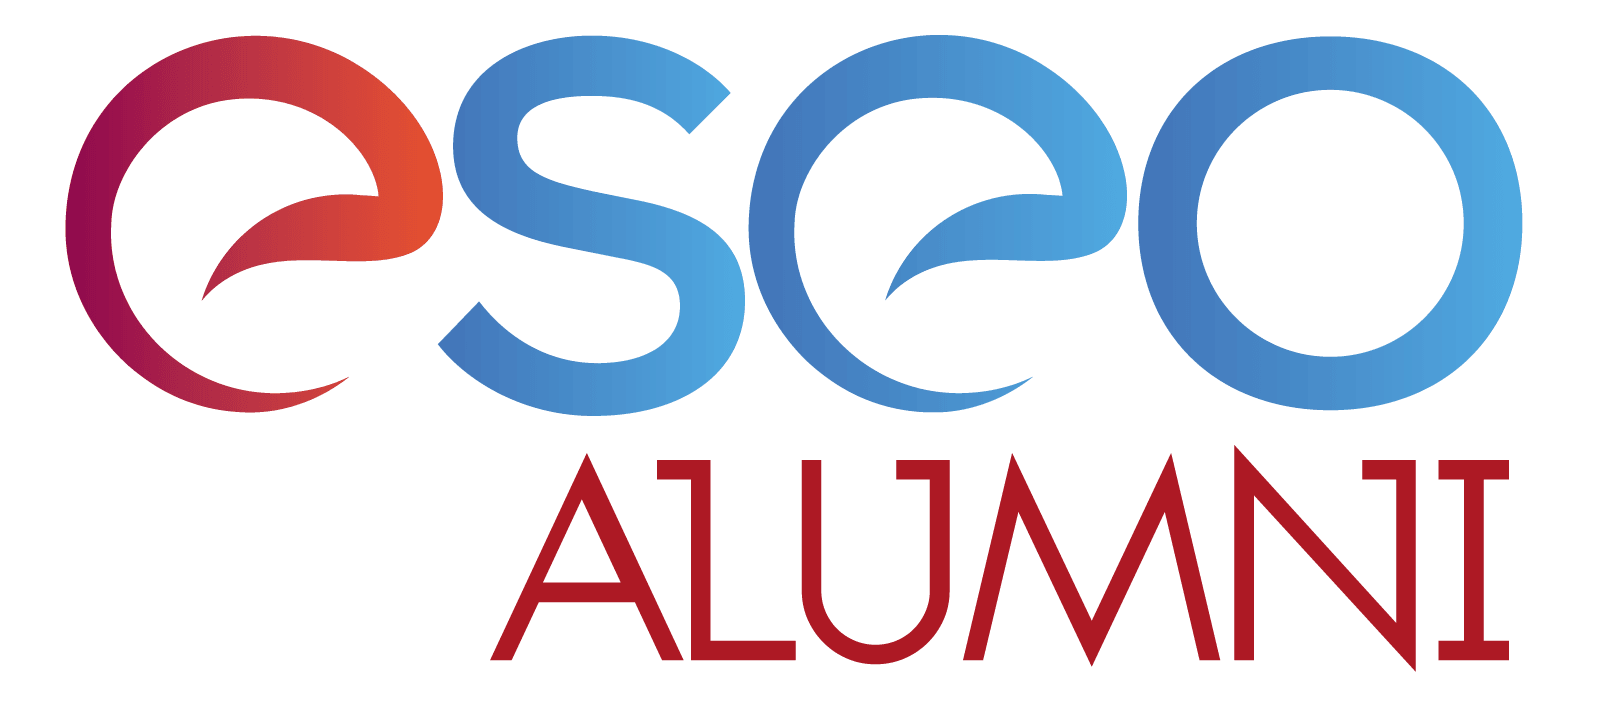 Communauté ESEO Alumni